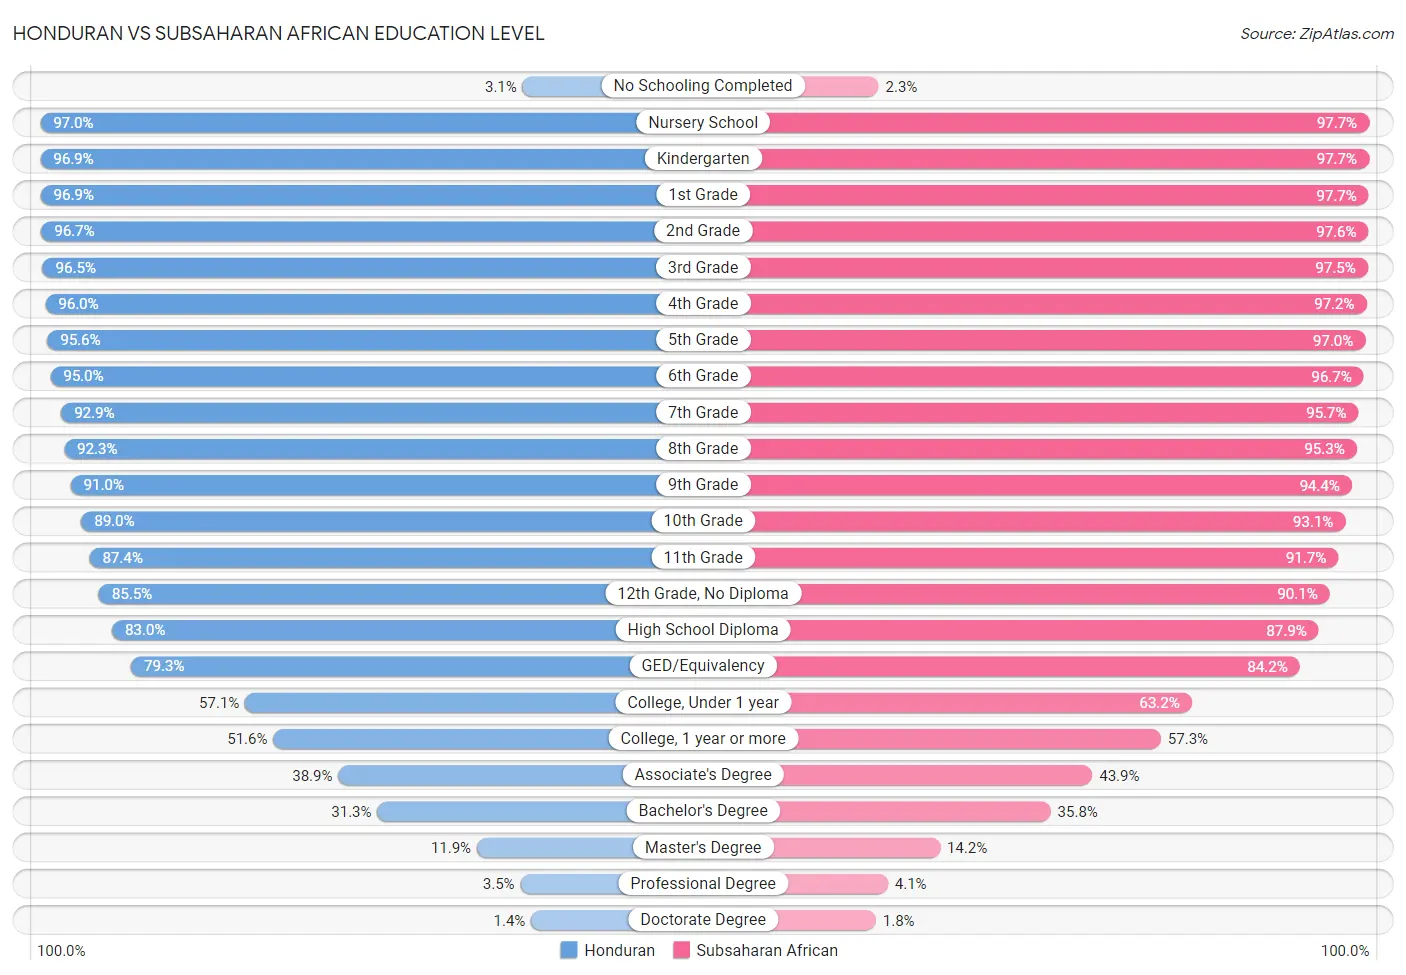 Honduran vs Subsaharan African Education Level